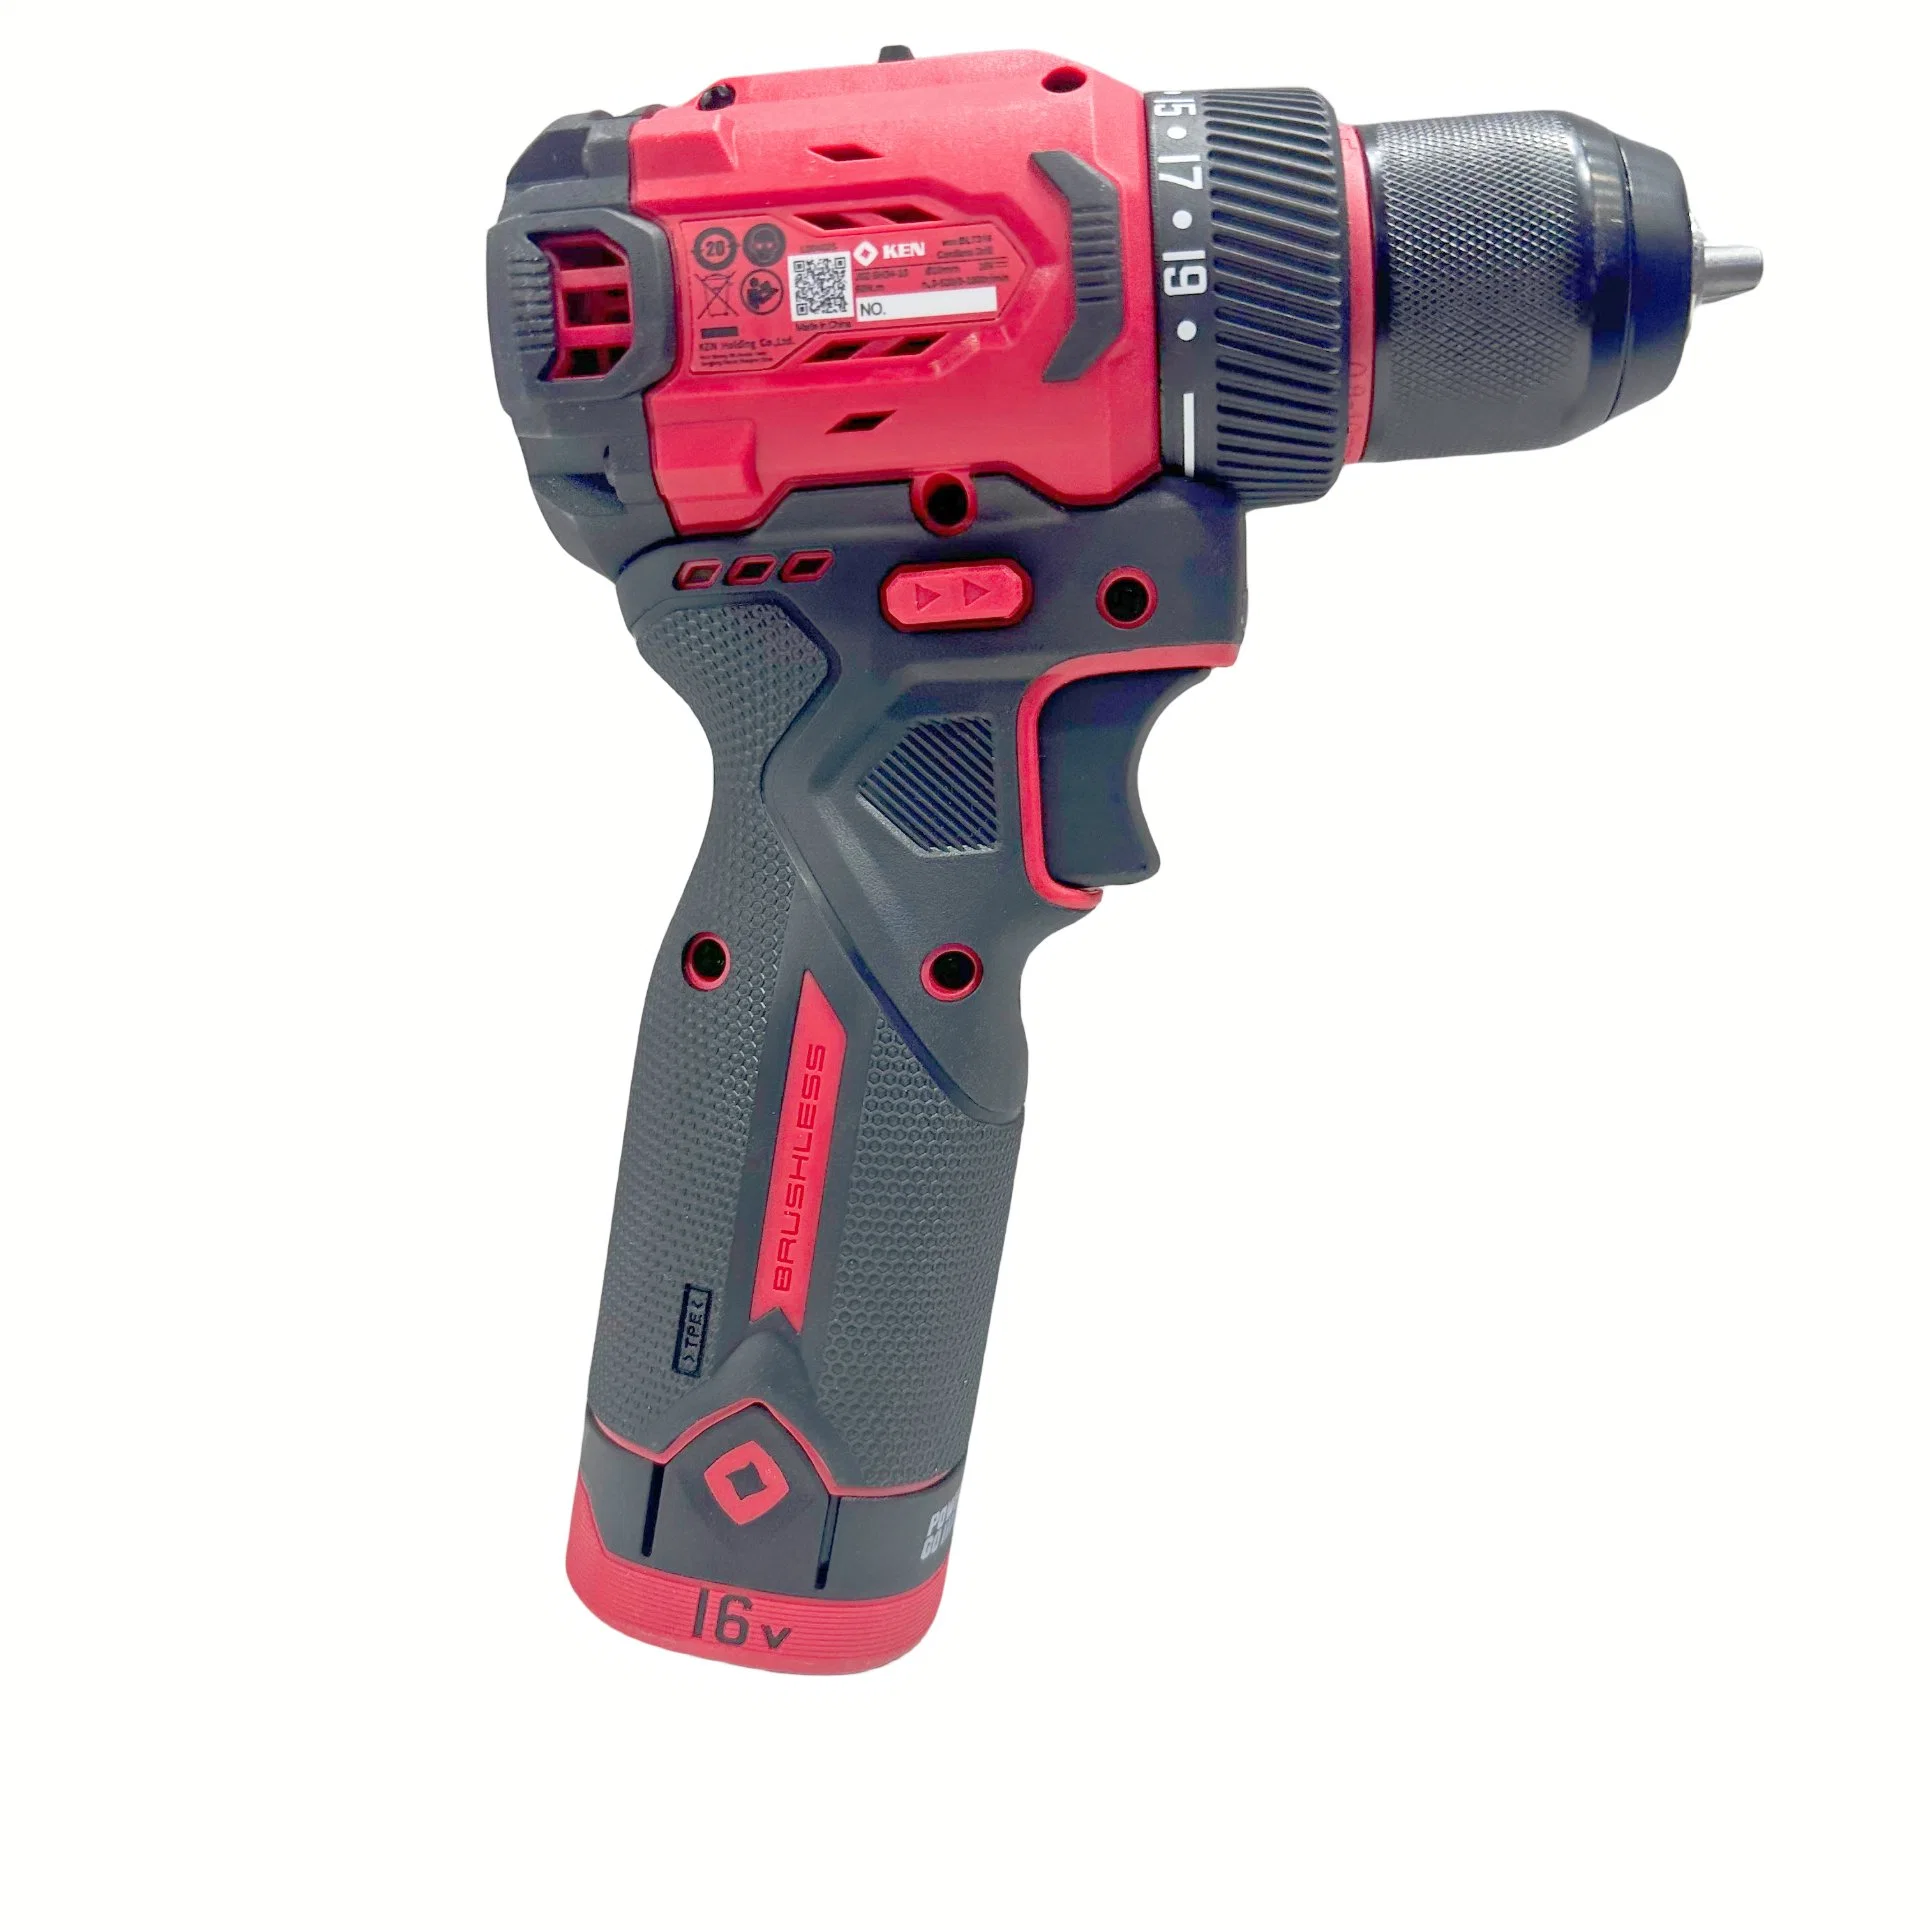 Ken Professional Power Tool DC16V Impact Drill